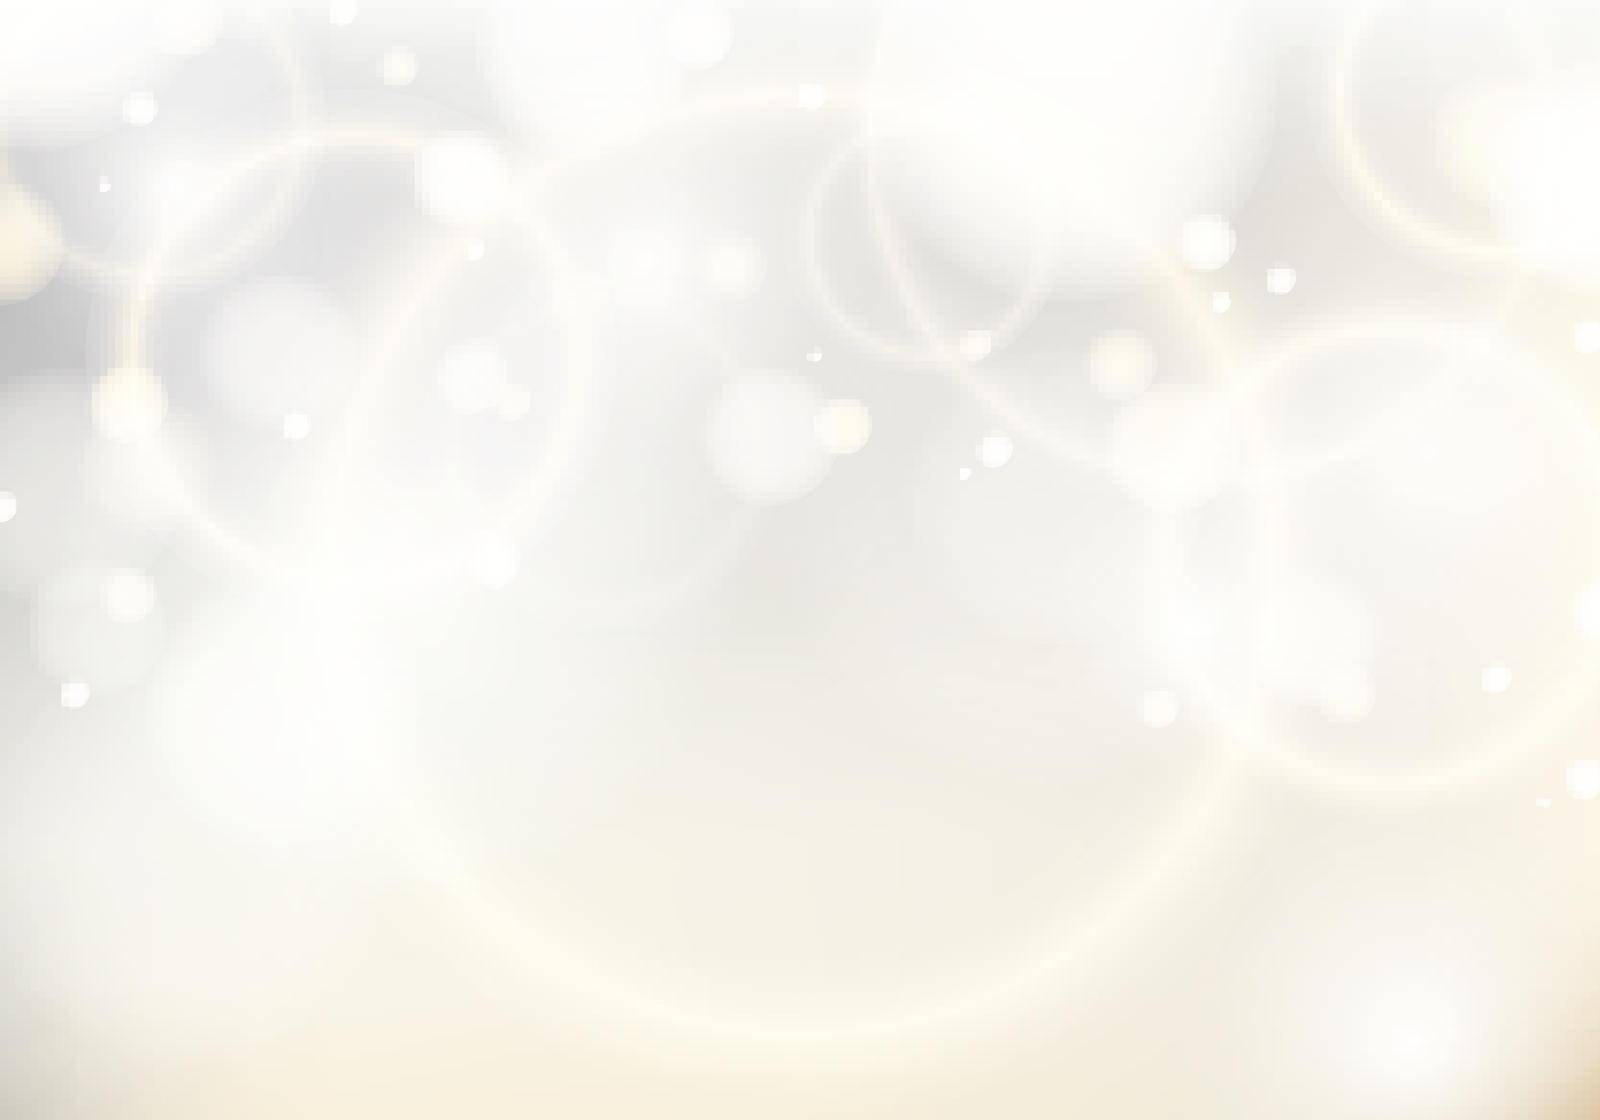 Abstract elegant blurred white background with golden light bokeh. Festive defocused white lights luxury style. Vector illustration